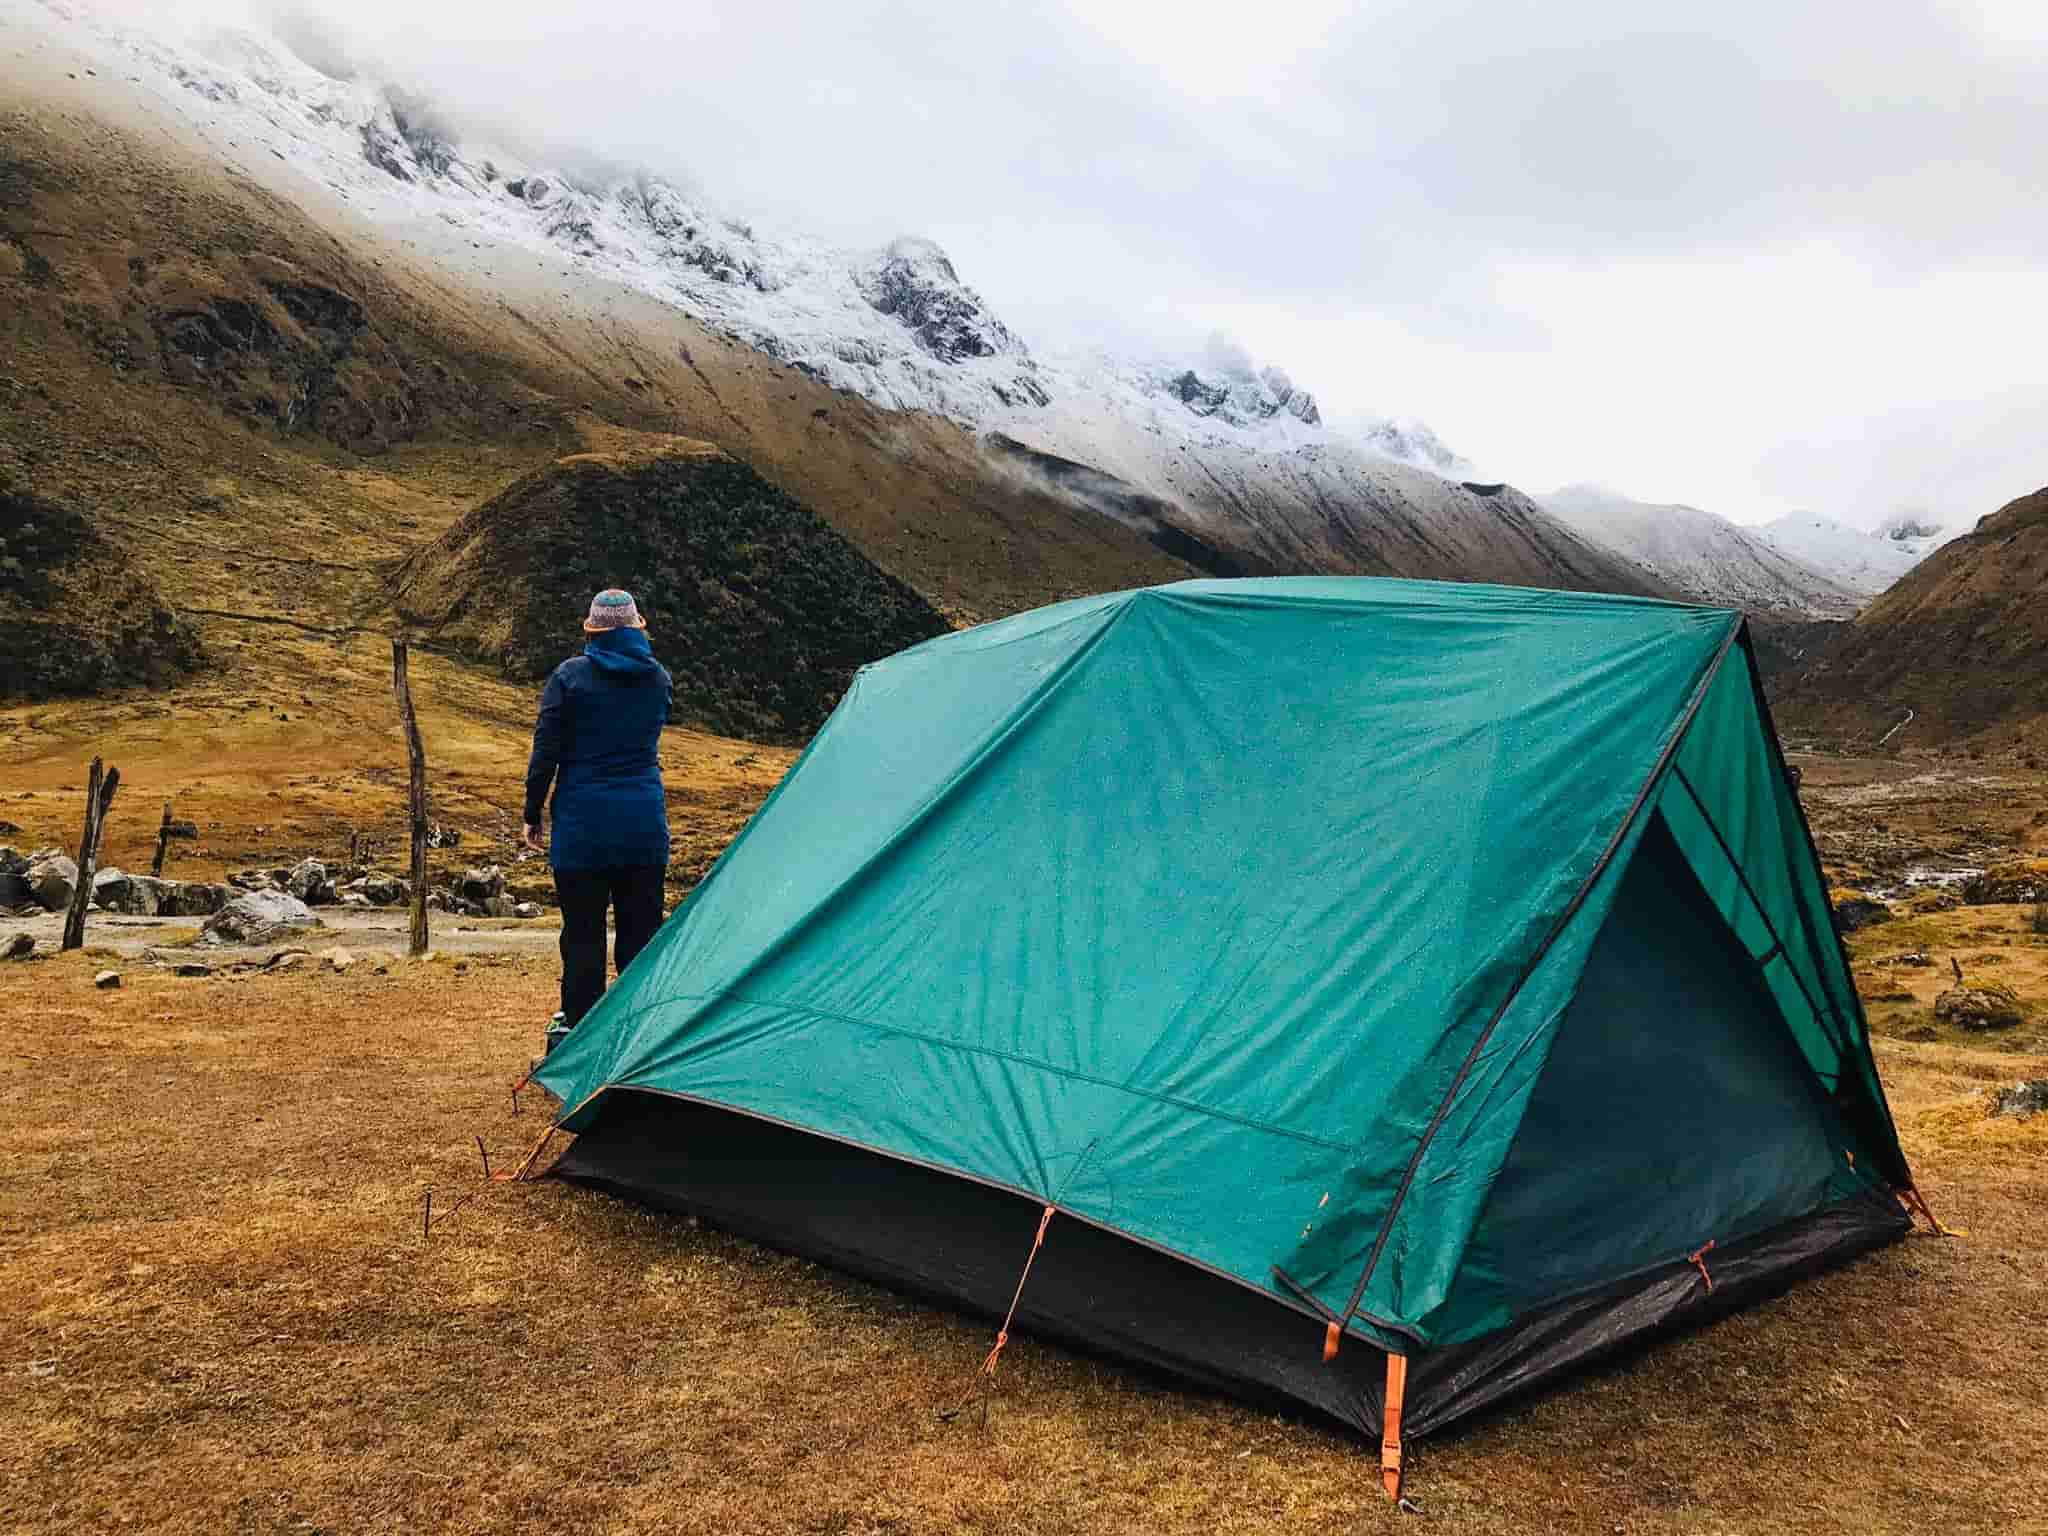 Campsite views during the 4-day Salkantay Trekking to Machu Picchu